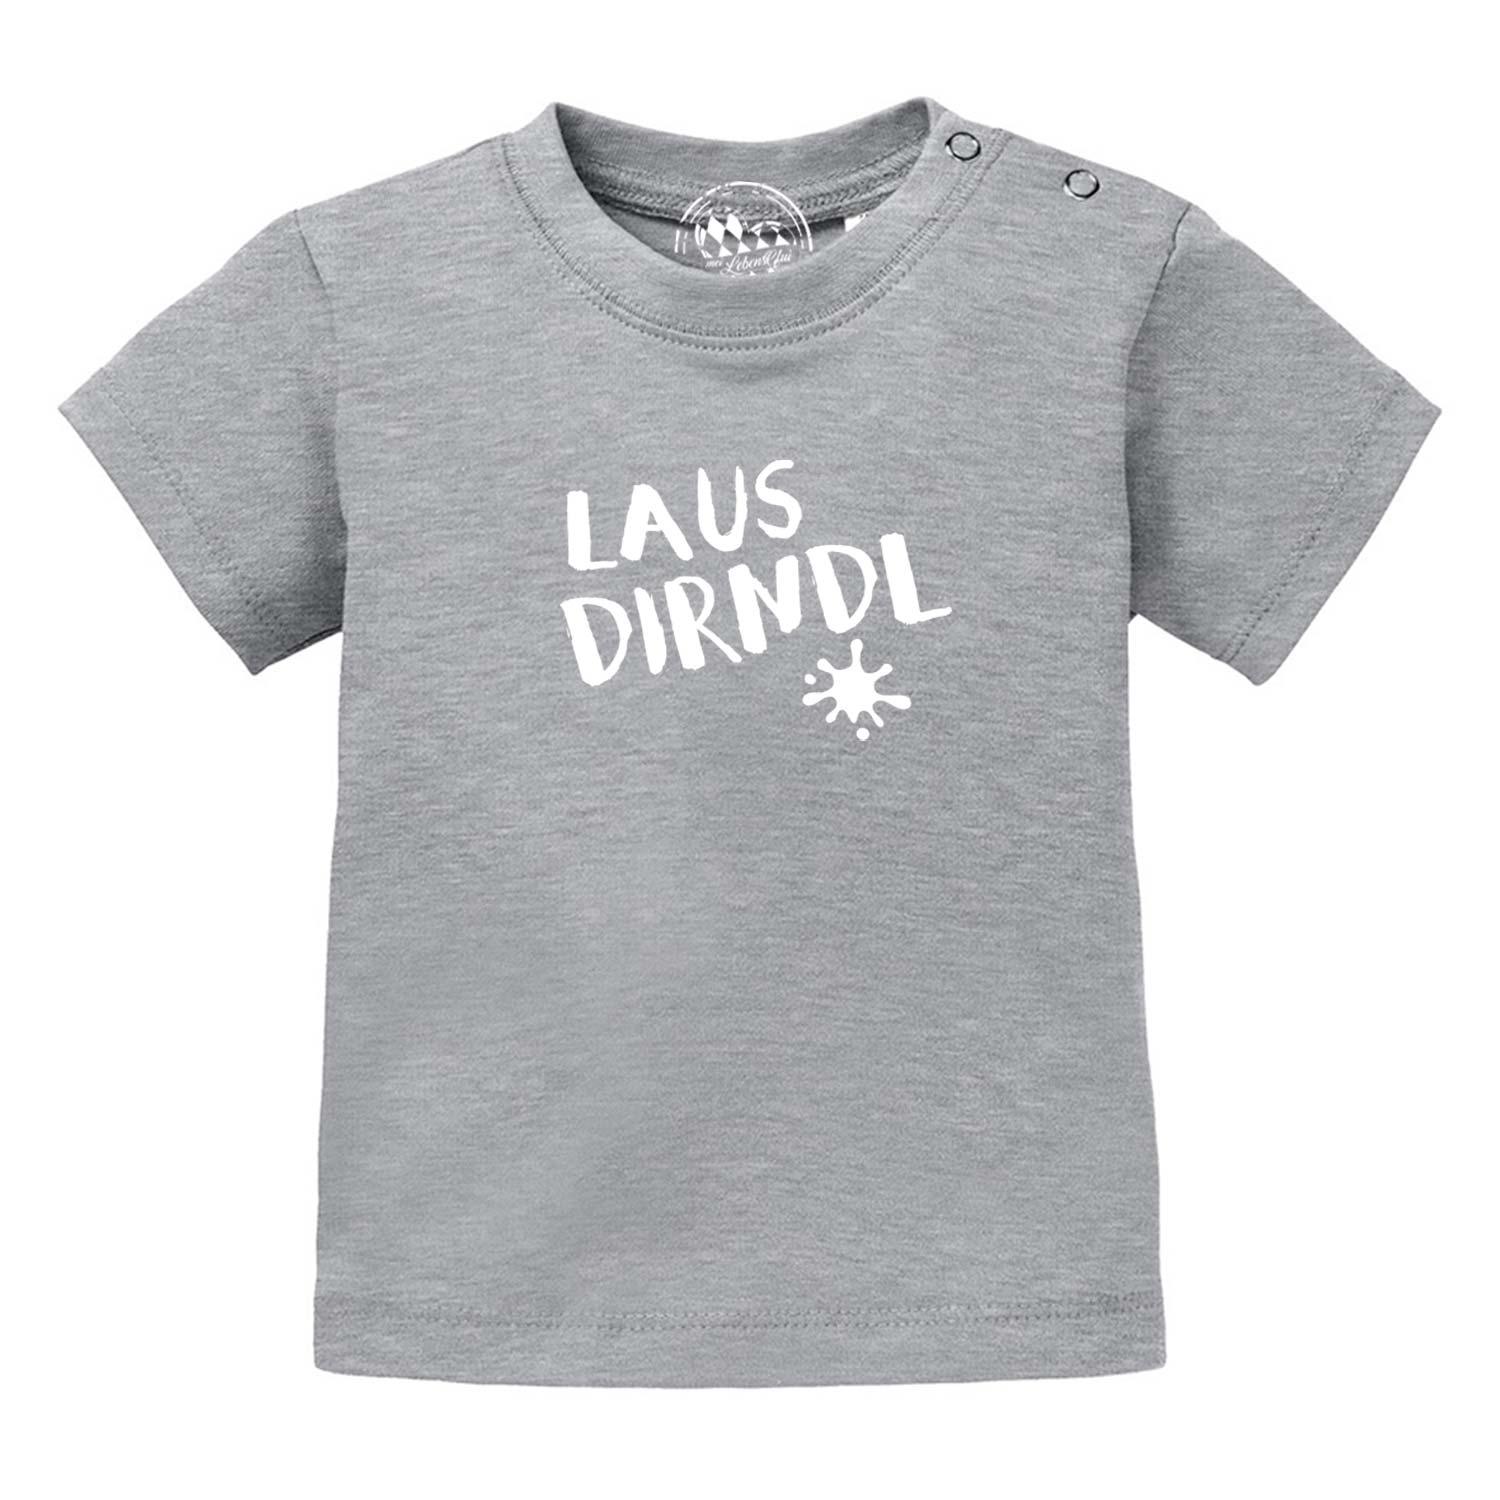 Baby T-Shirt "Lausdirndl" - bavariashop - mei LebensGfui